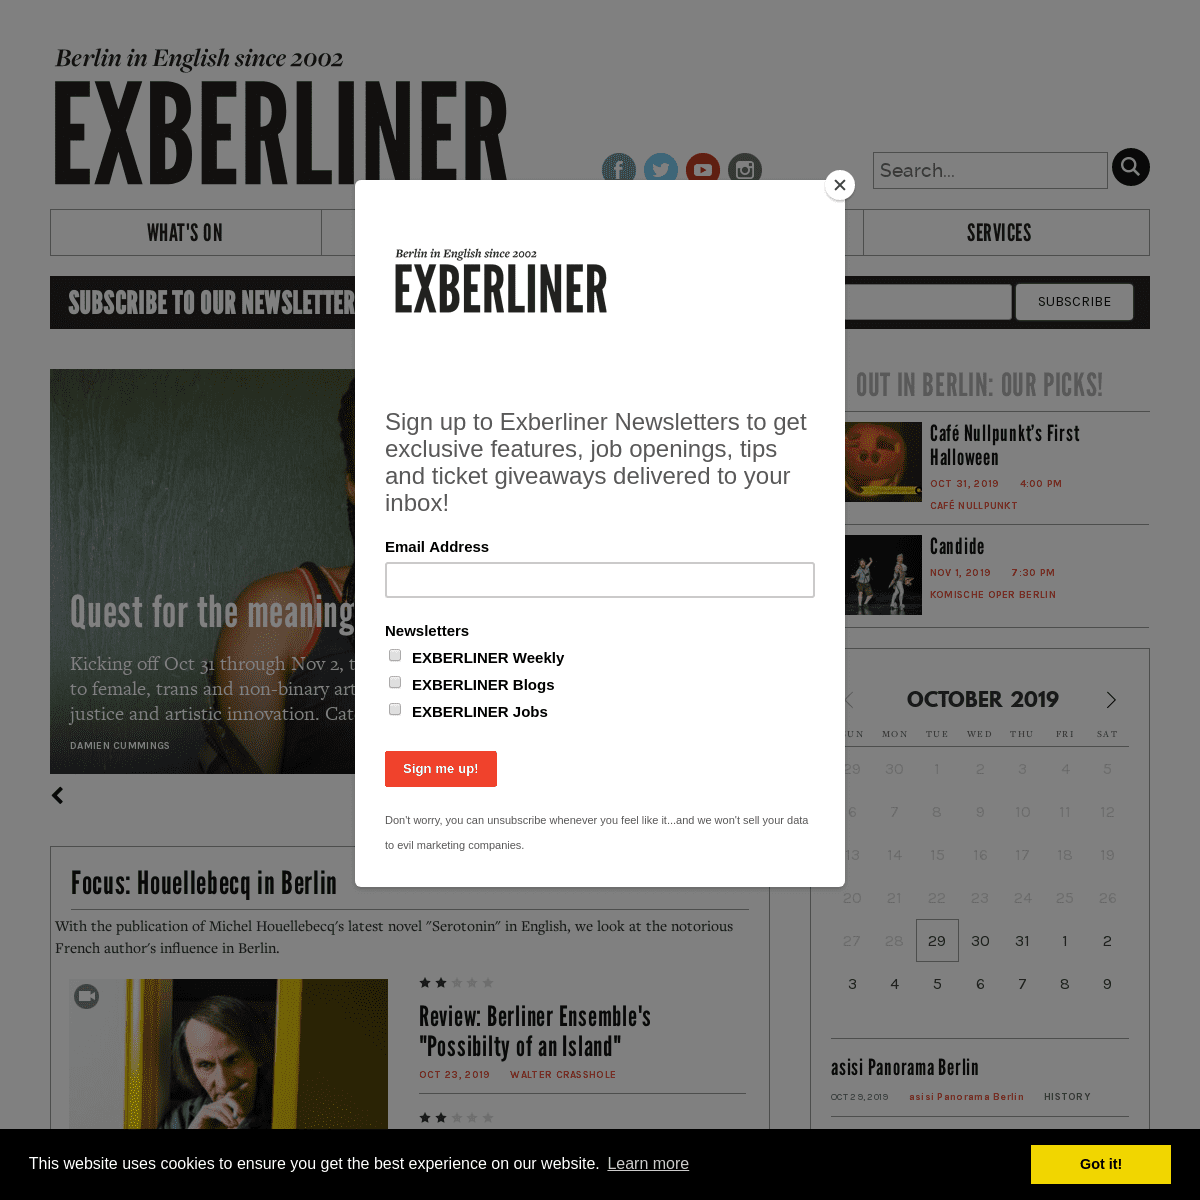 A complete backup of exberliner.com